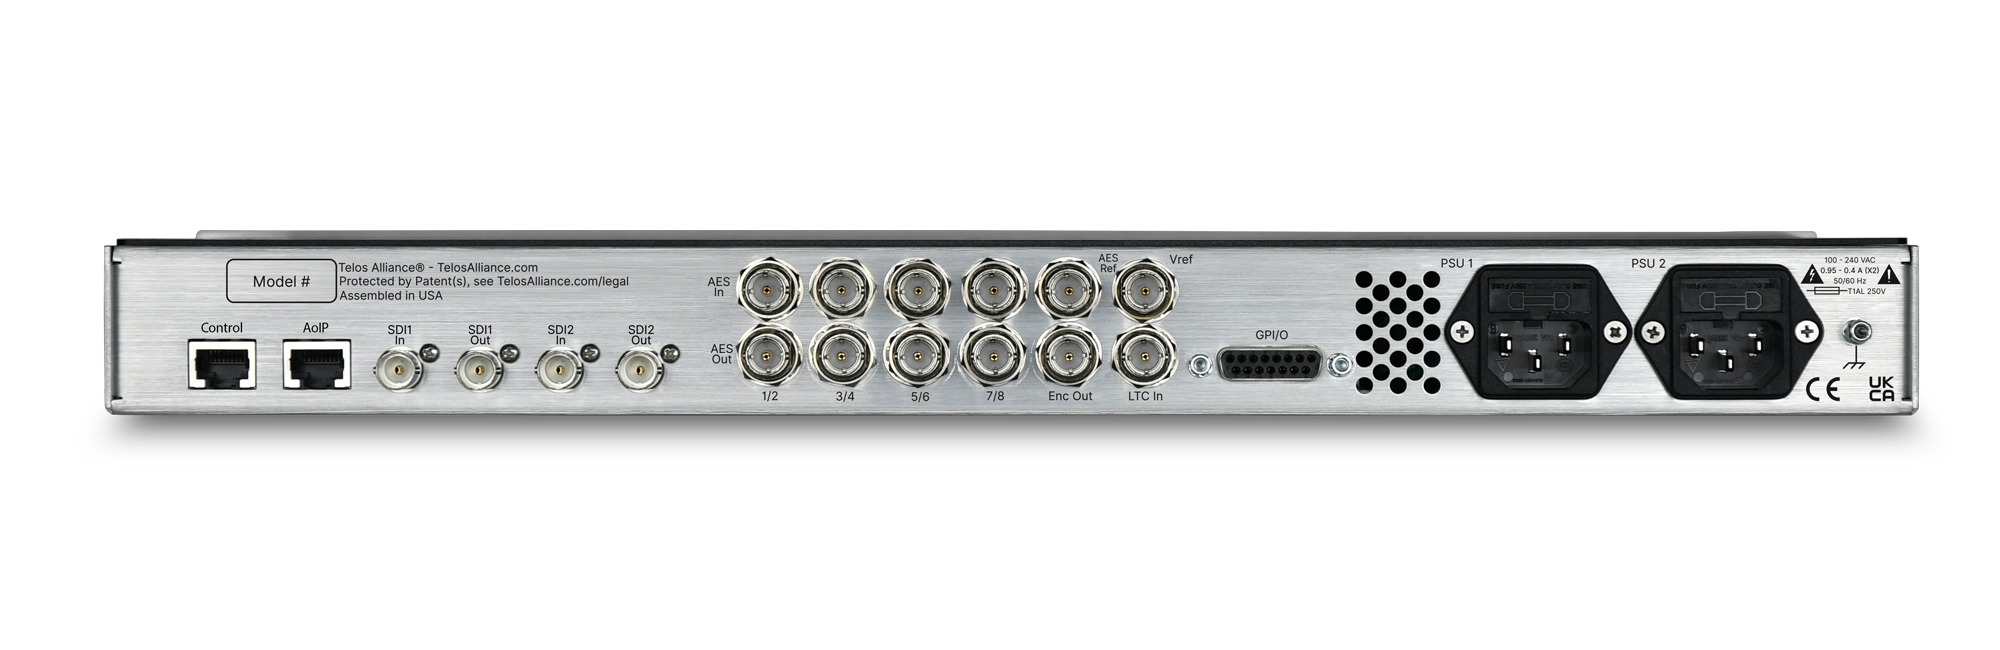 Linear Acoustic AERO.20 DTV Audio Processor